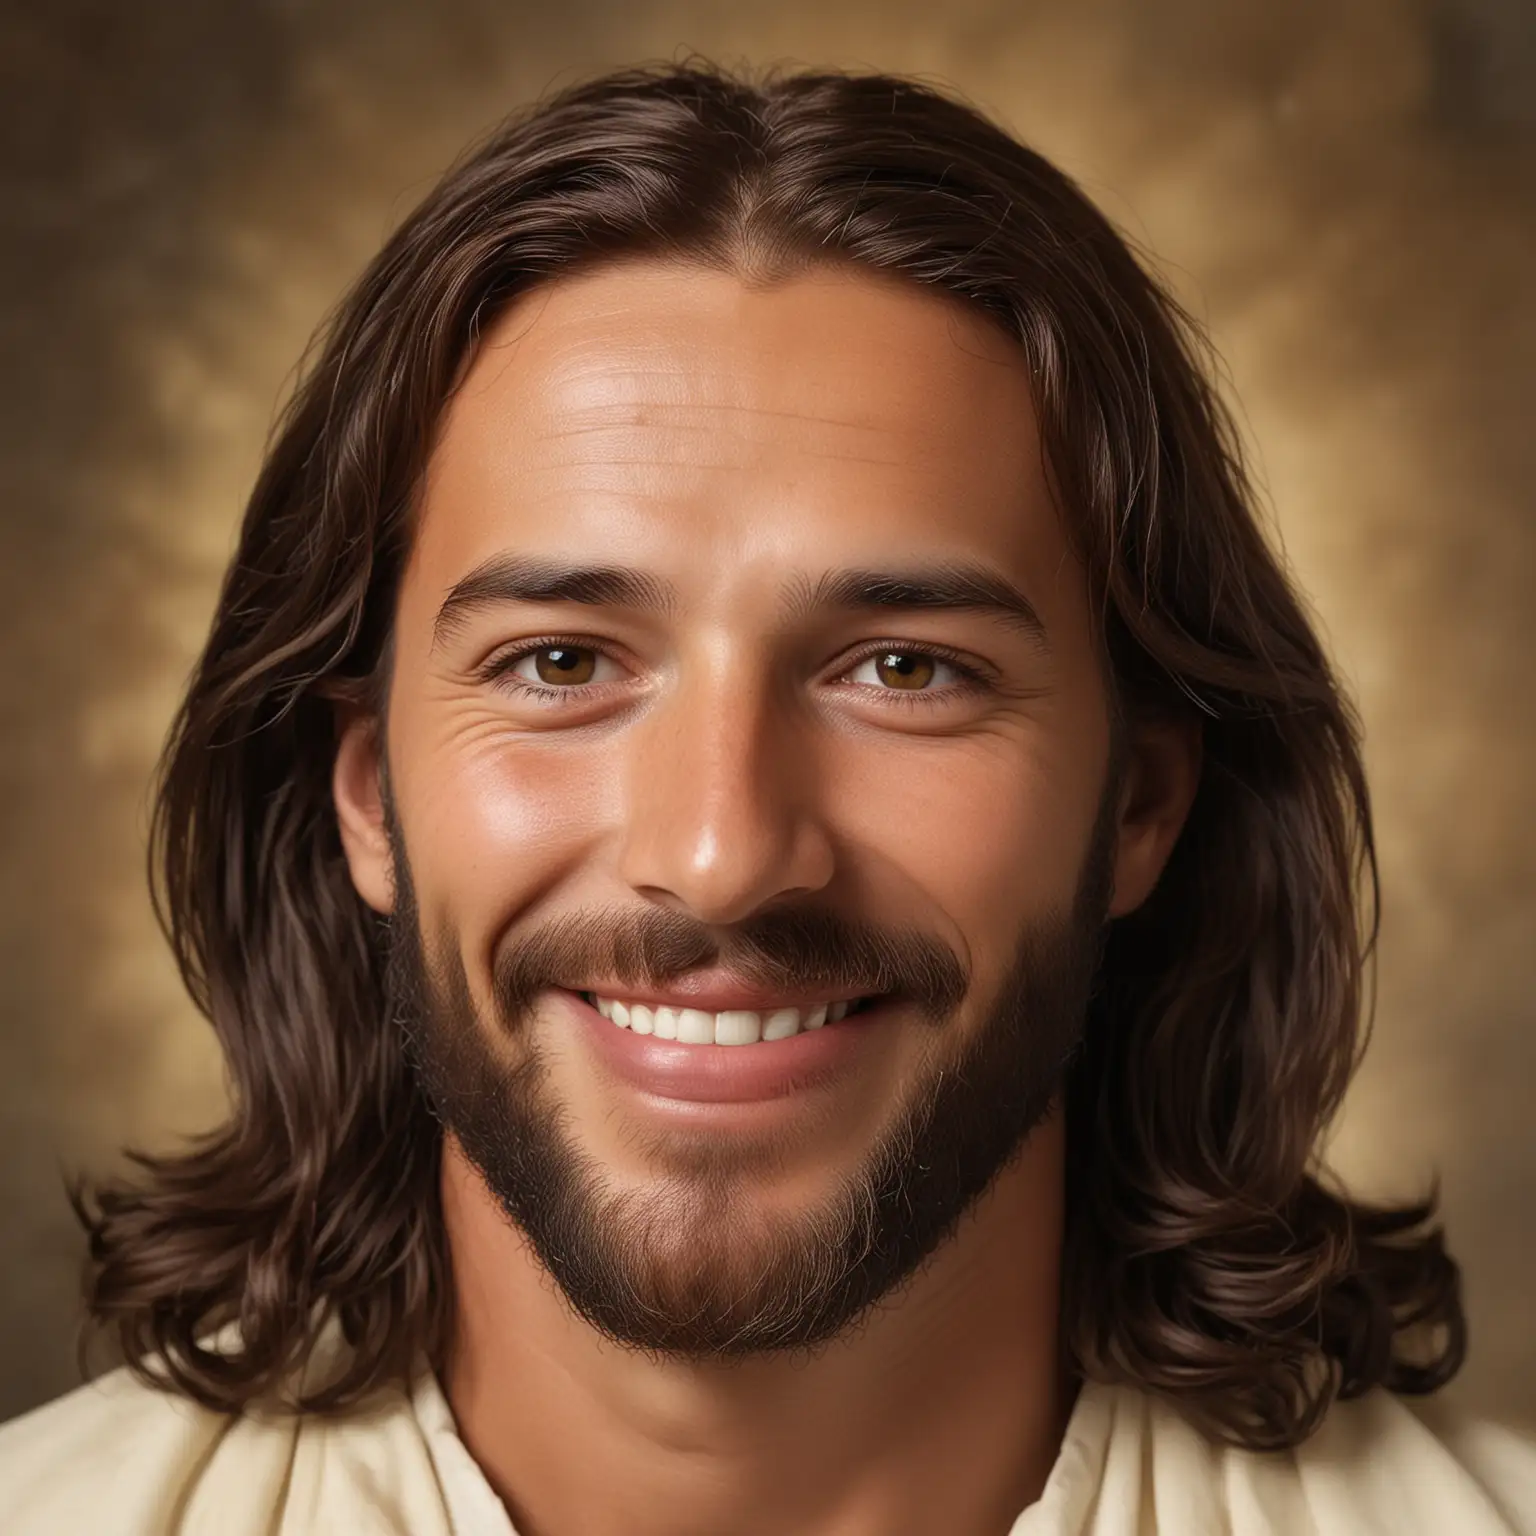 Smiling Portrait of Jesus Serene and Compassionate Religious Art